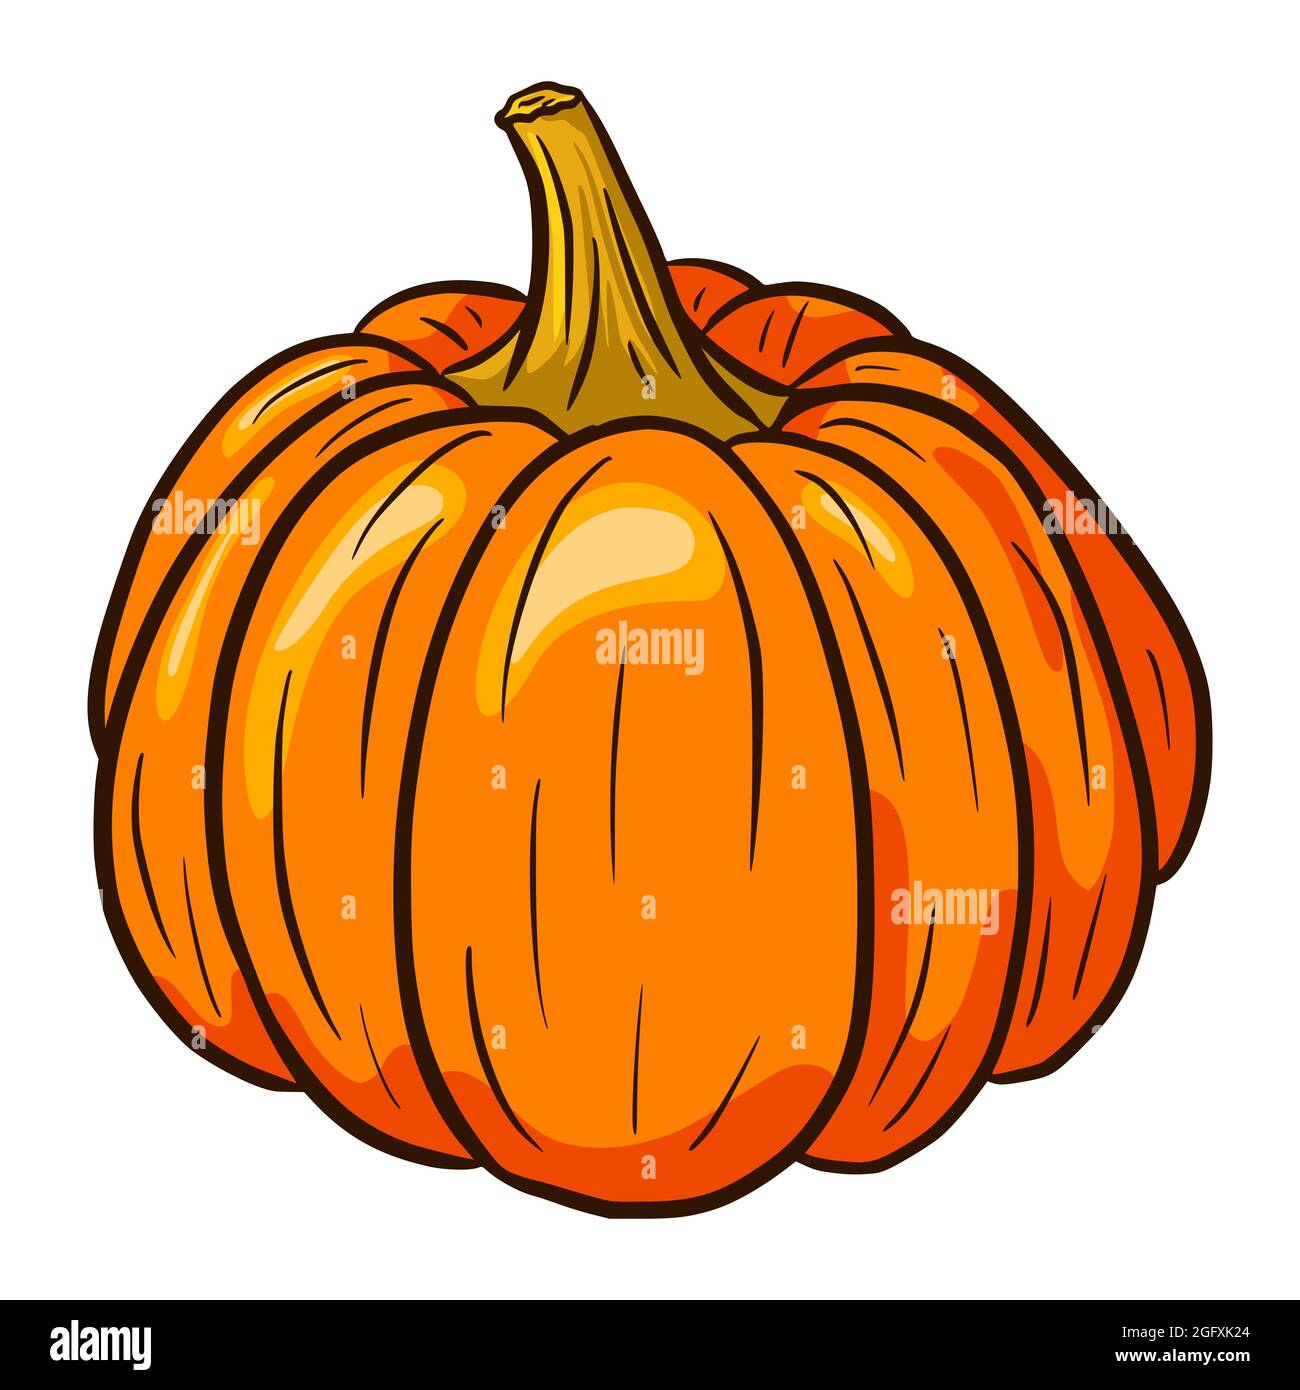 Orange Pumpkin Illustration. Autumn Food Icon. Ripe squash sketch. Element for autumn decorative design, halloween invitation, harvest, sticker, print, logo, menu, recipe Stock Vector